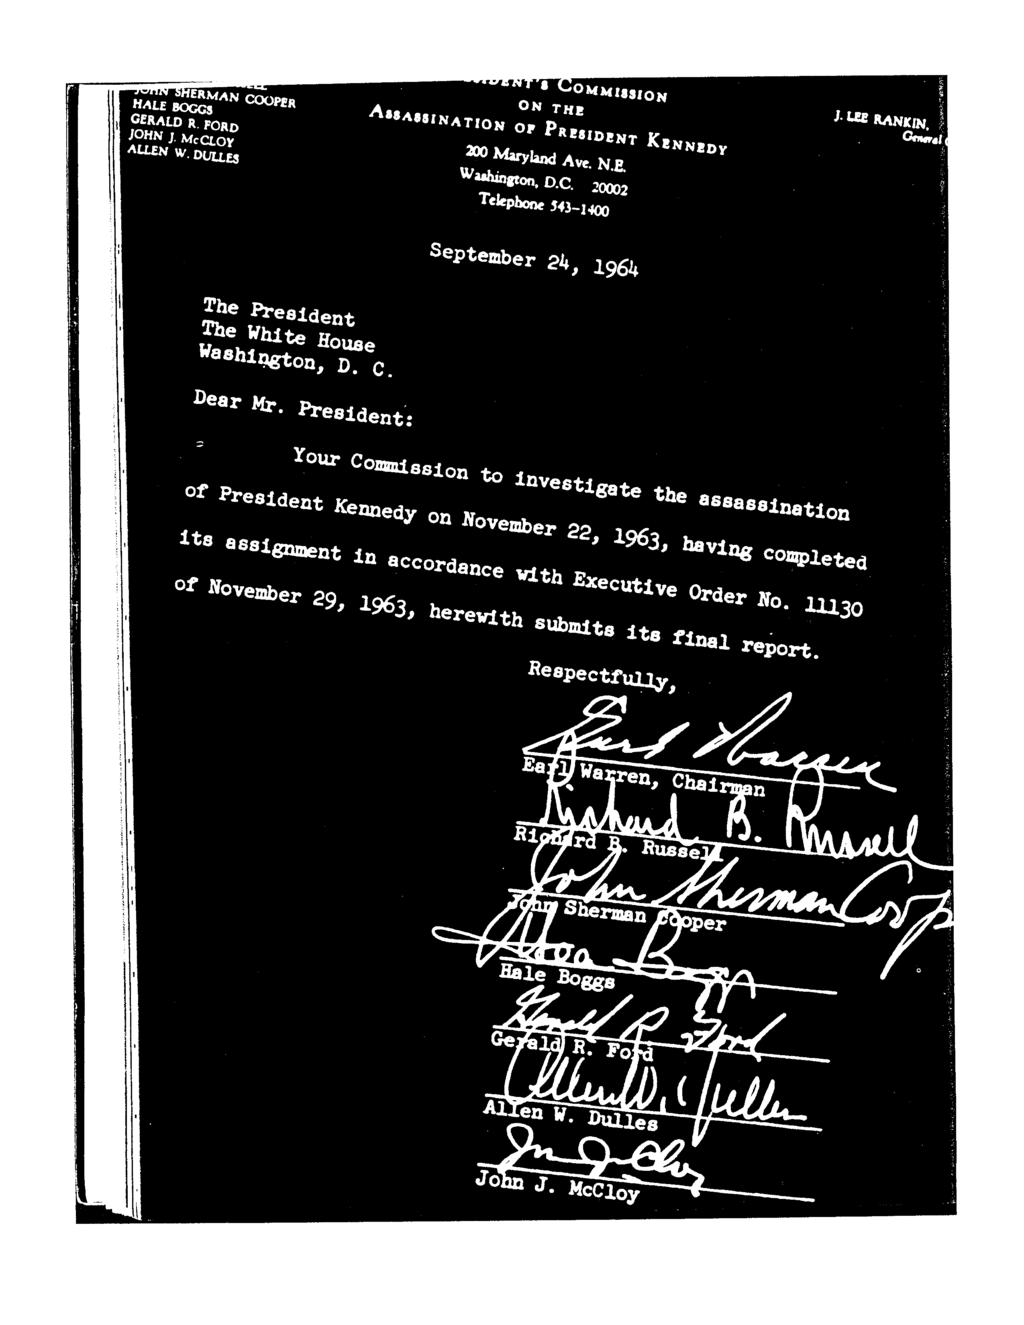 ERMAN COOPER HALE BOGGS GERALD R. FORD JOHN J. McCLOY ALLEN W. DULLES OMMISSION ON THE ASSMISINATION Of PRESIDENT KtNNEDY 200 Maryland Ave. N.B. 3. LIE RANKIN. Gownit, Washington, D.C. 20002 Telephone 543-1400 September 24, 1964 The President The White House Washington, D.